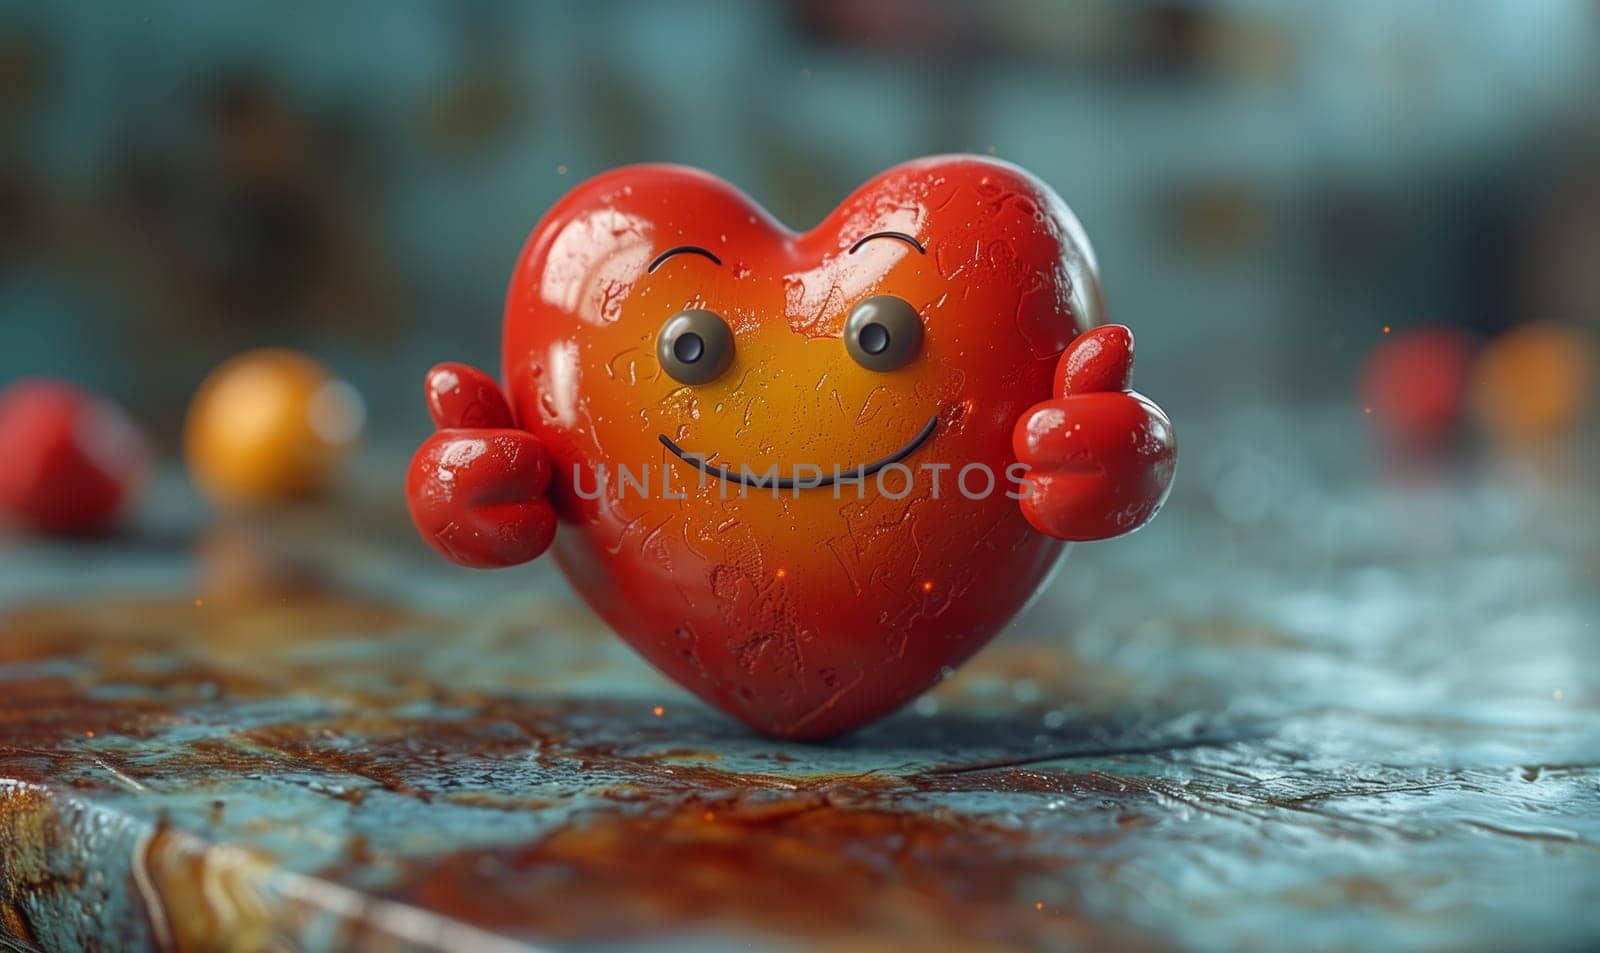 Cartoon, 3D, red heart shaped character. by Fischeron